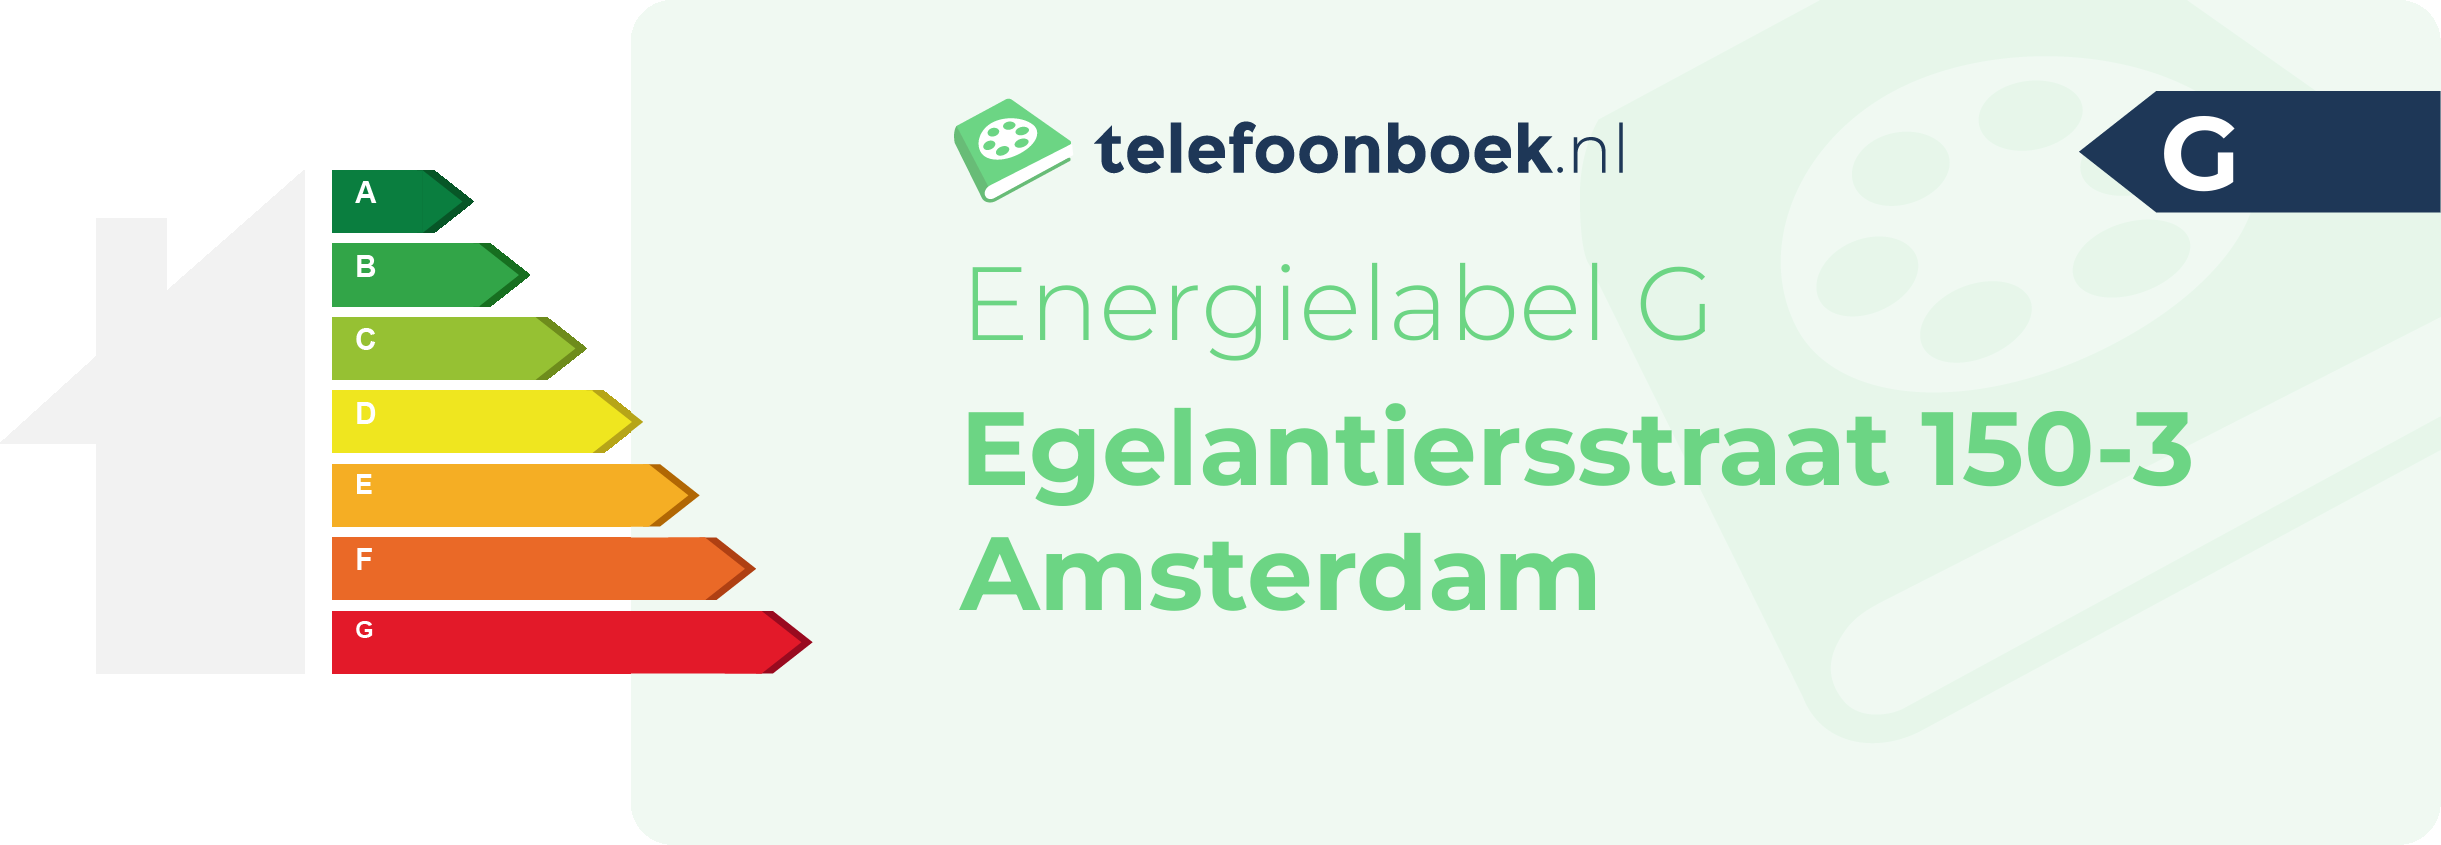 Energielabel Egelantiersstraat 150-3 Amsterdam